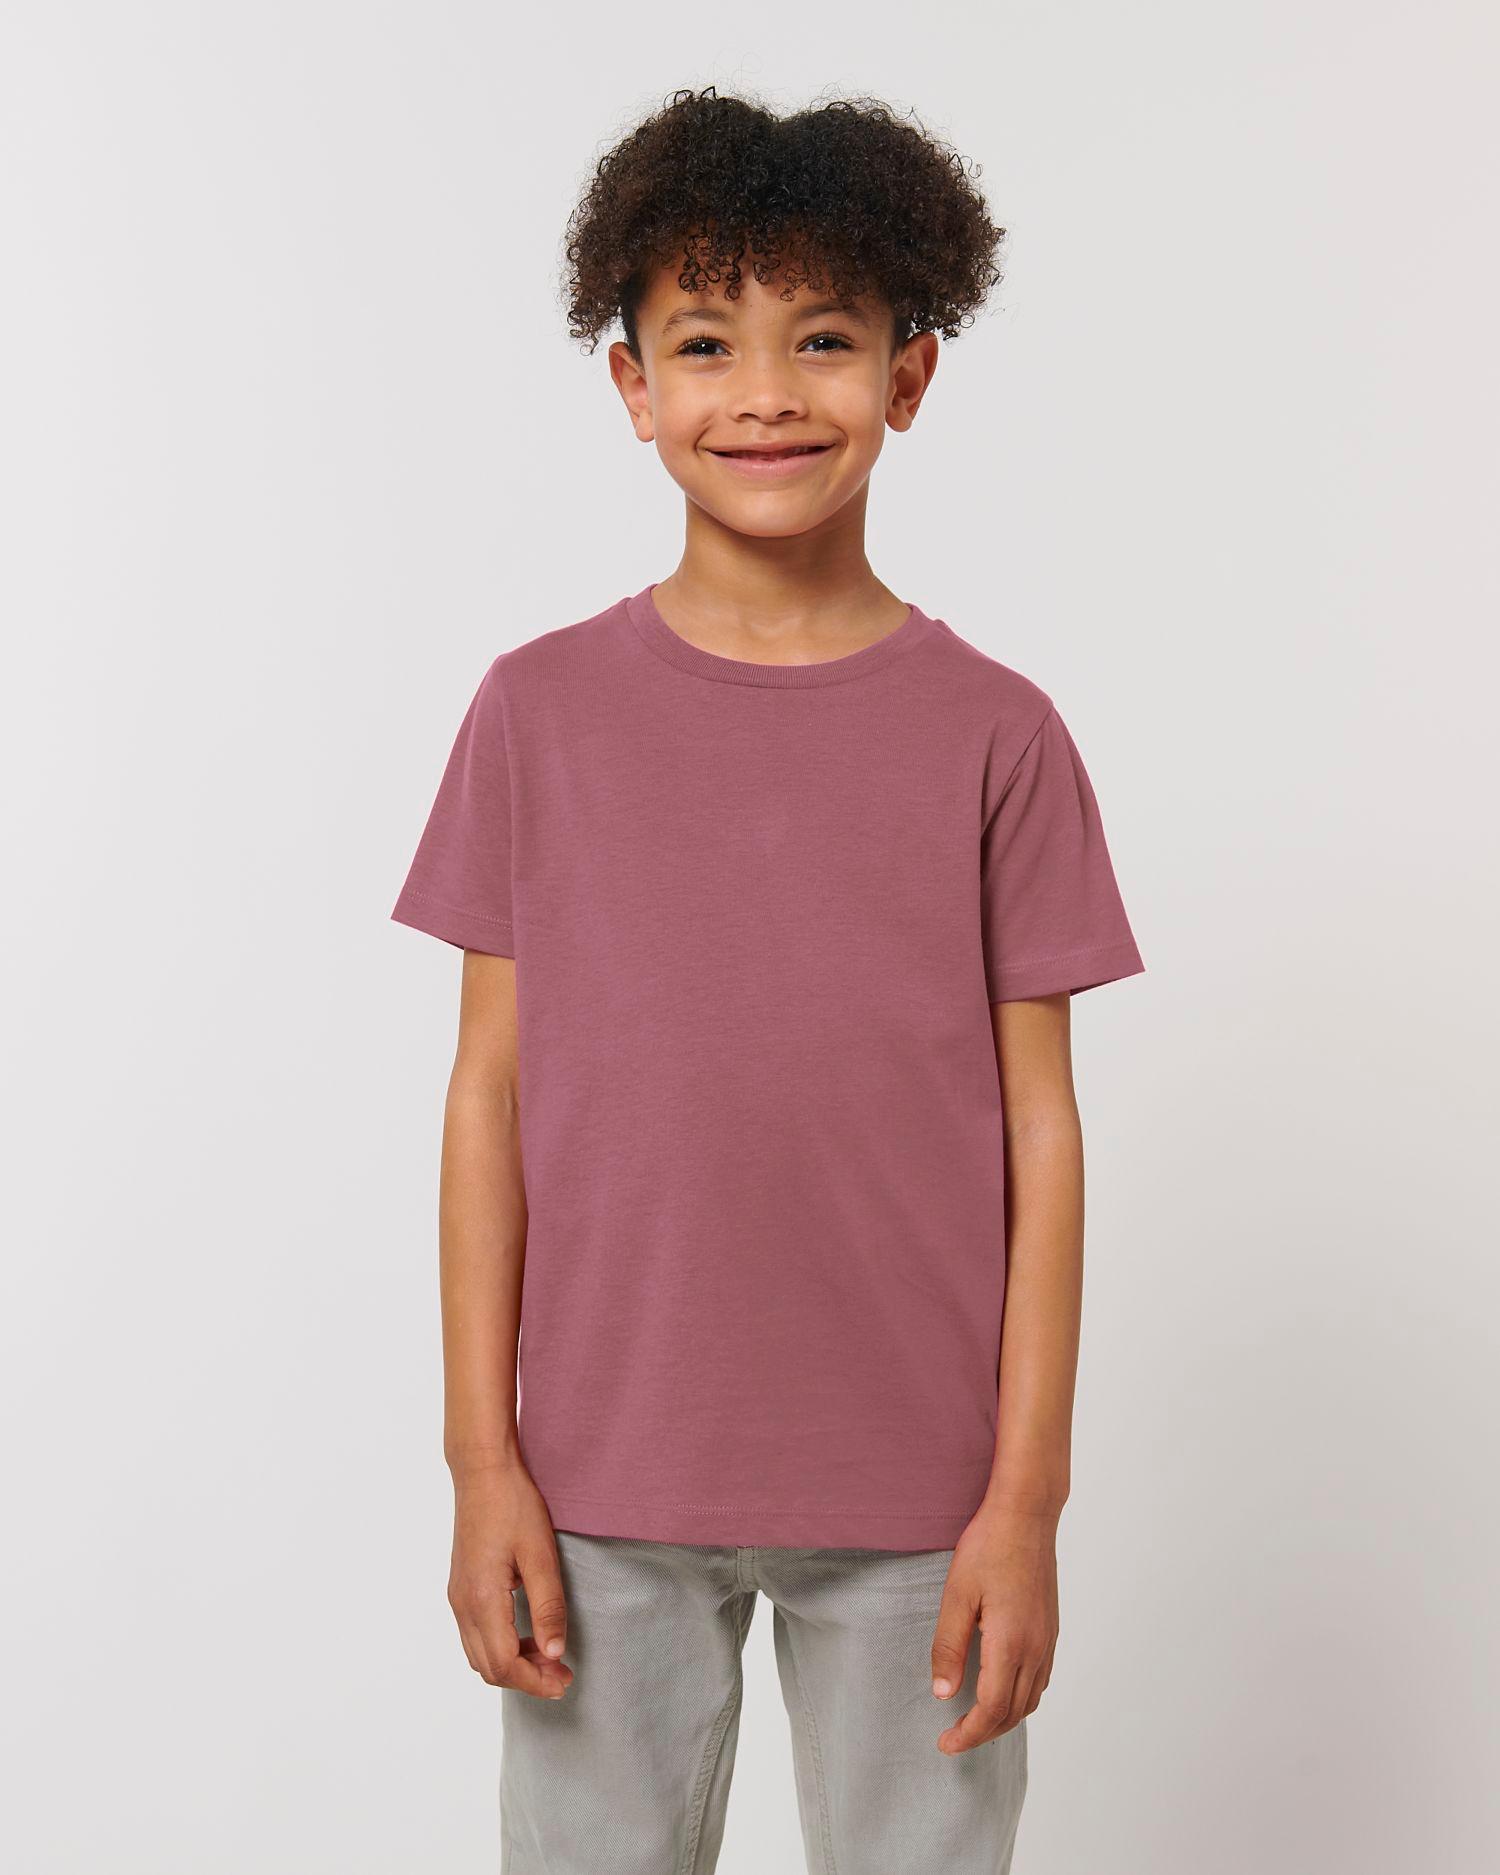 pictoT-Shirt Enfant 100% Coton Bio | Broderie Et Impression Hibiscus Rose